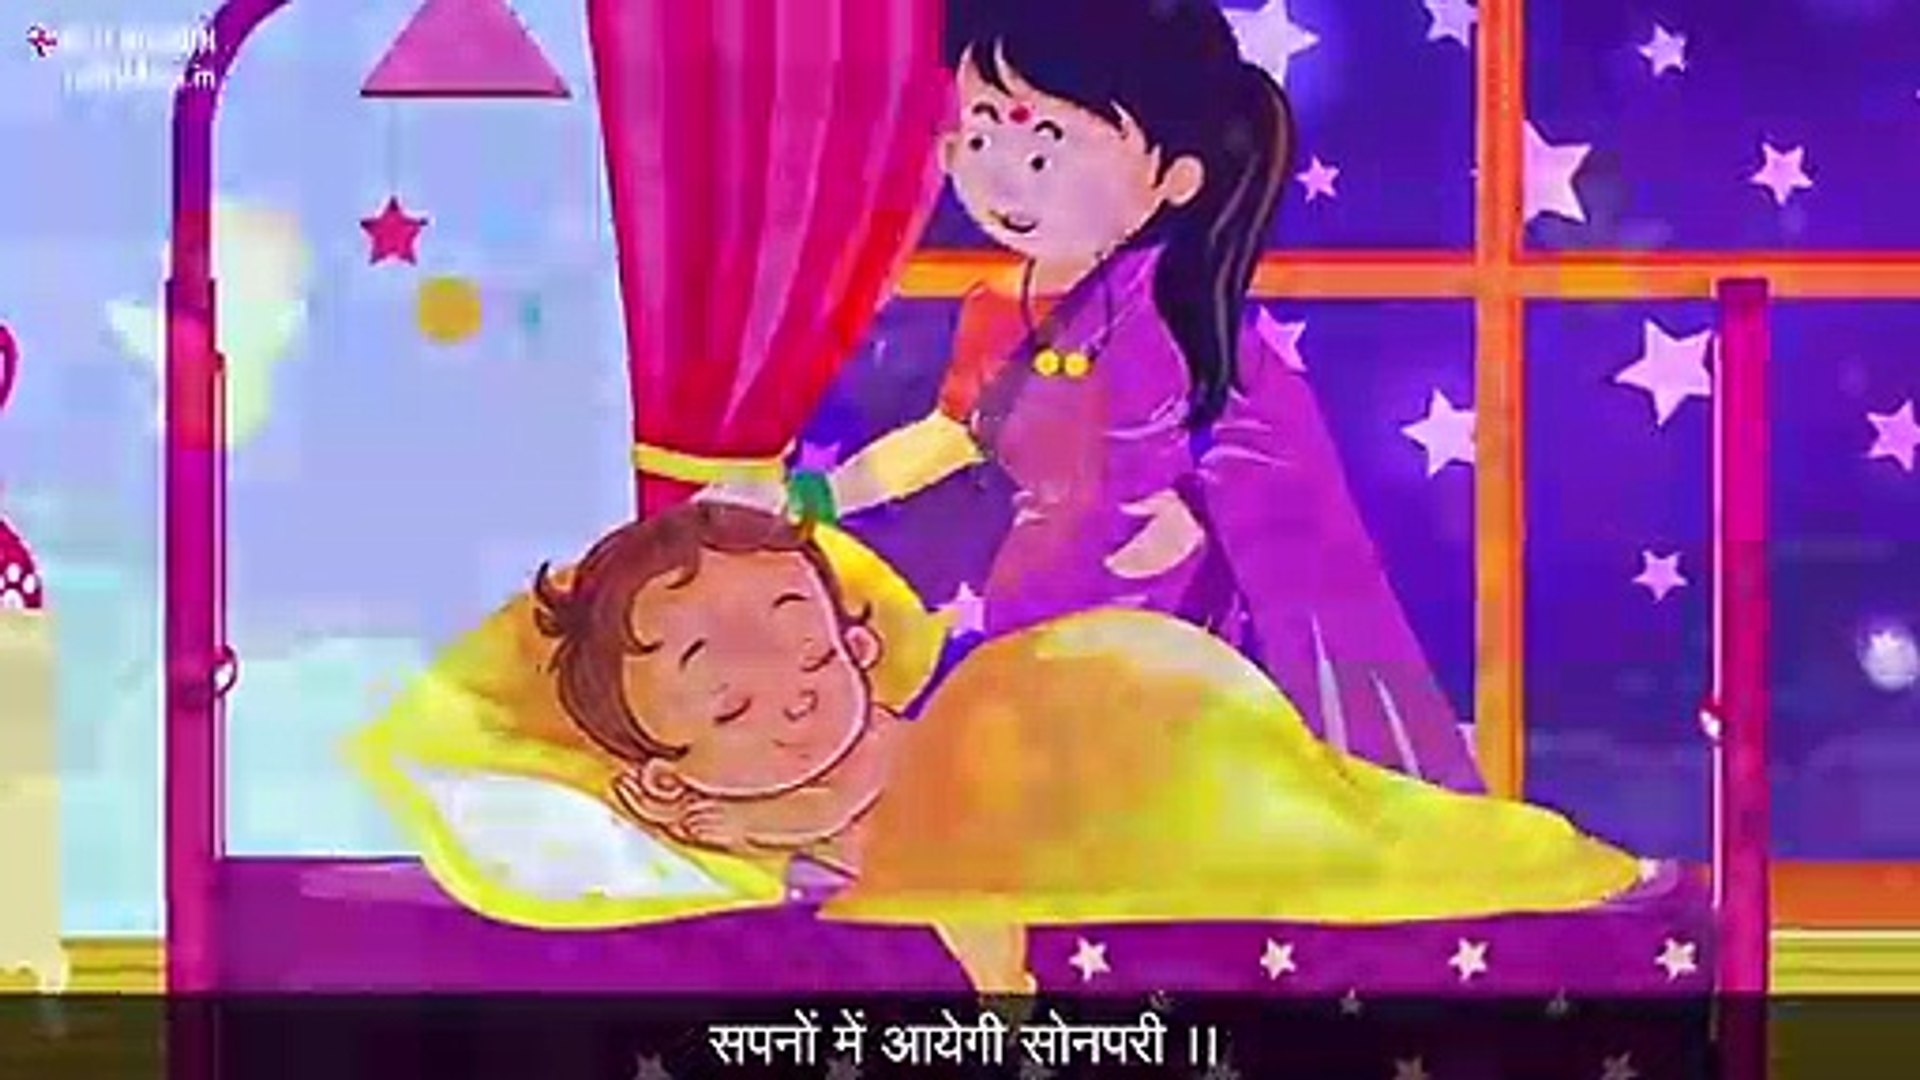 Sonpari | Hindi Lori (Lullaby) Song | Animated song | Lalitya Munshaw |  RedRibbonKids - video Dailymotion